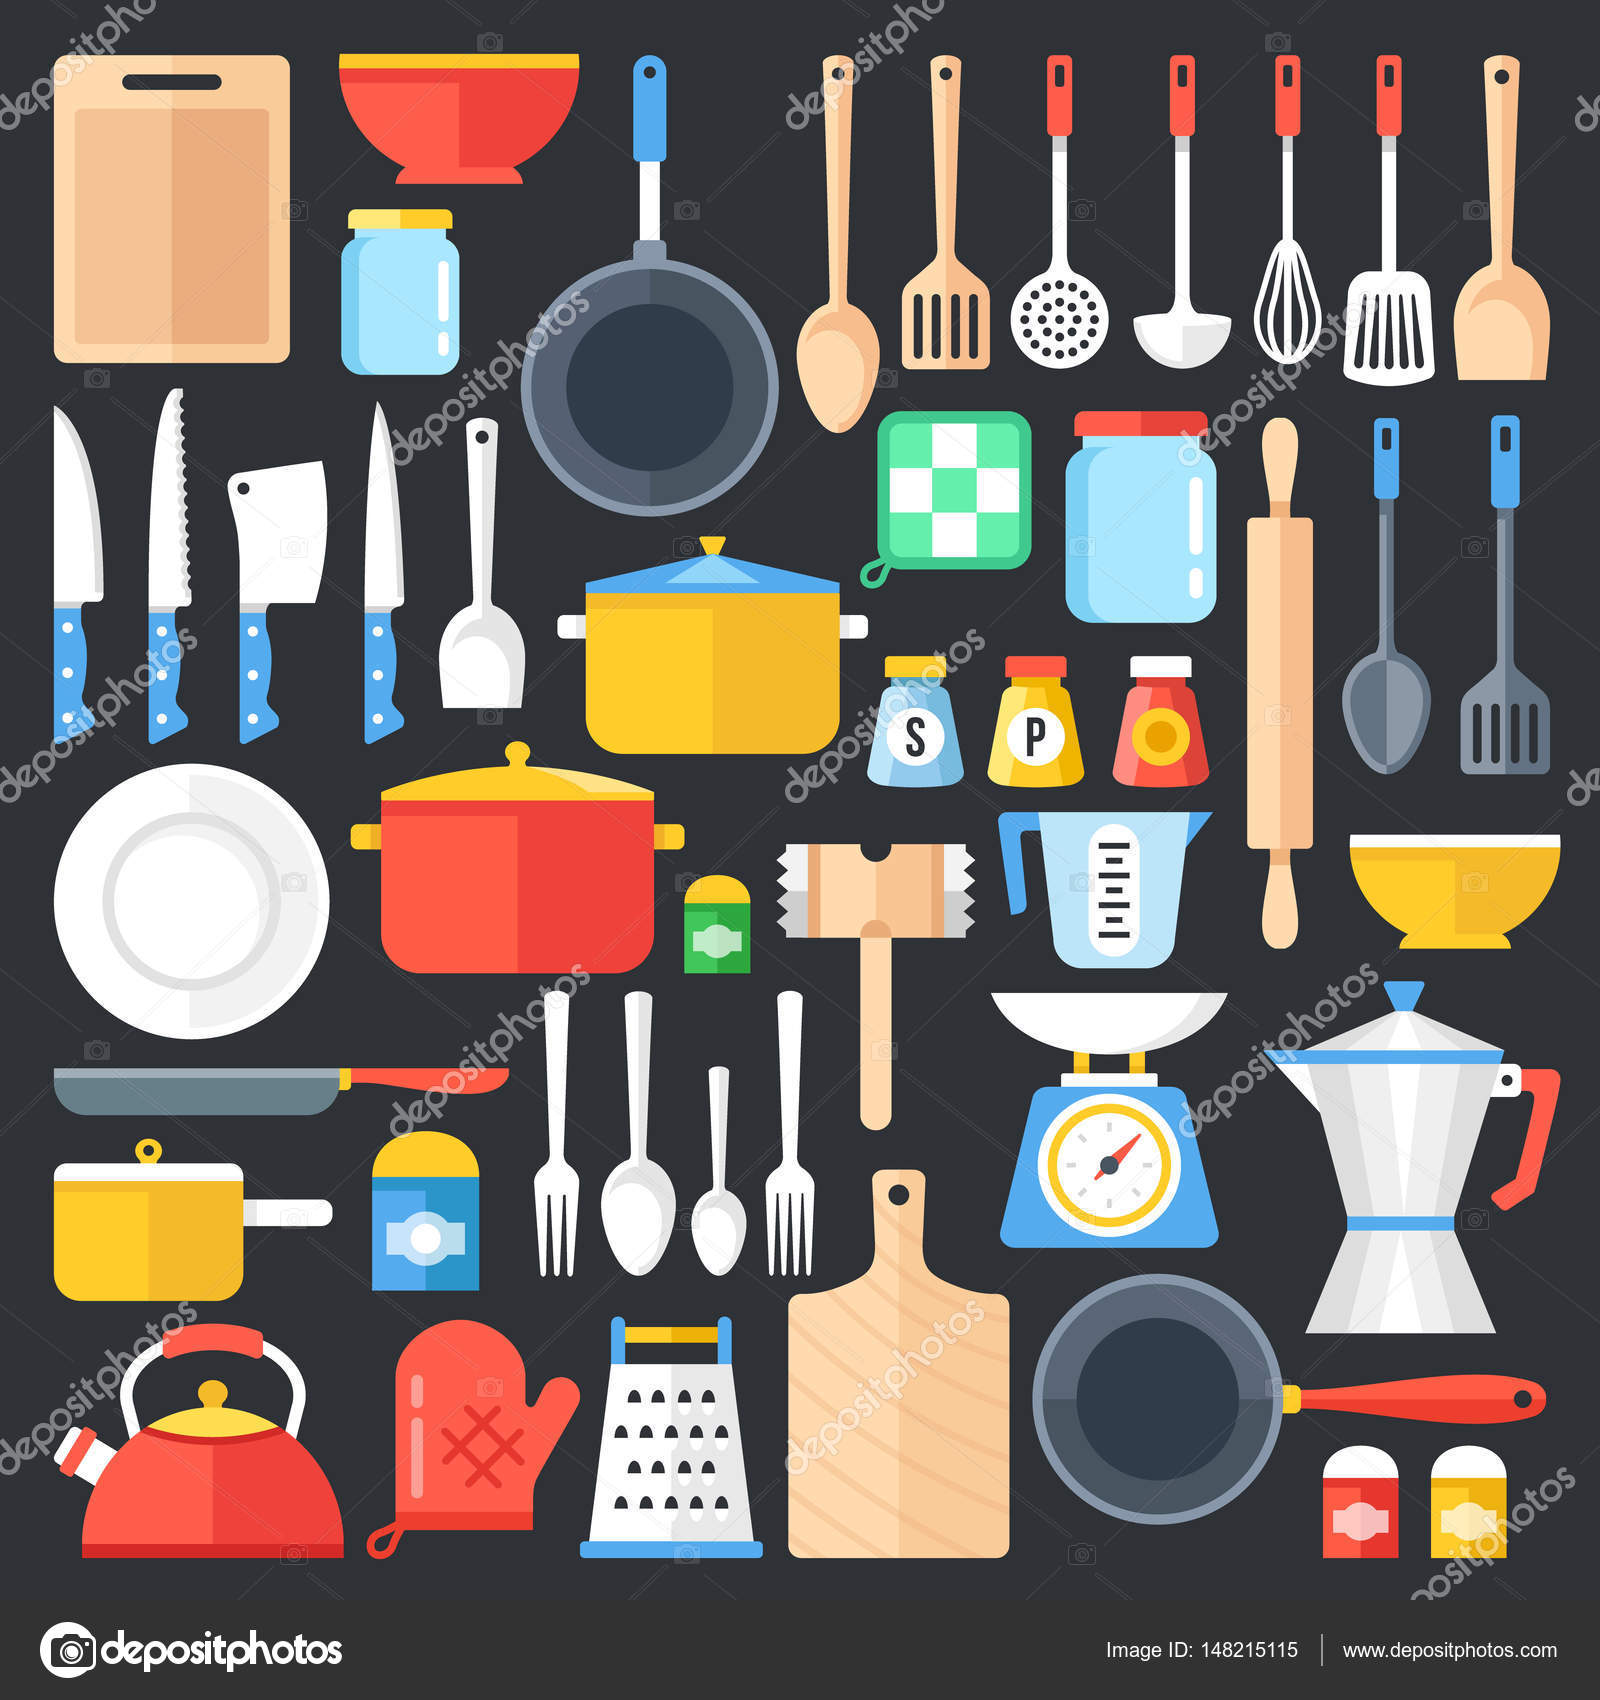 https://st3.depositphotos.com/1734074/14821/v/1600/depositphotos_148215115-stock-illustration-kitchen-utensils-set-kitchenware-cookware.jpg